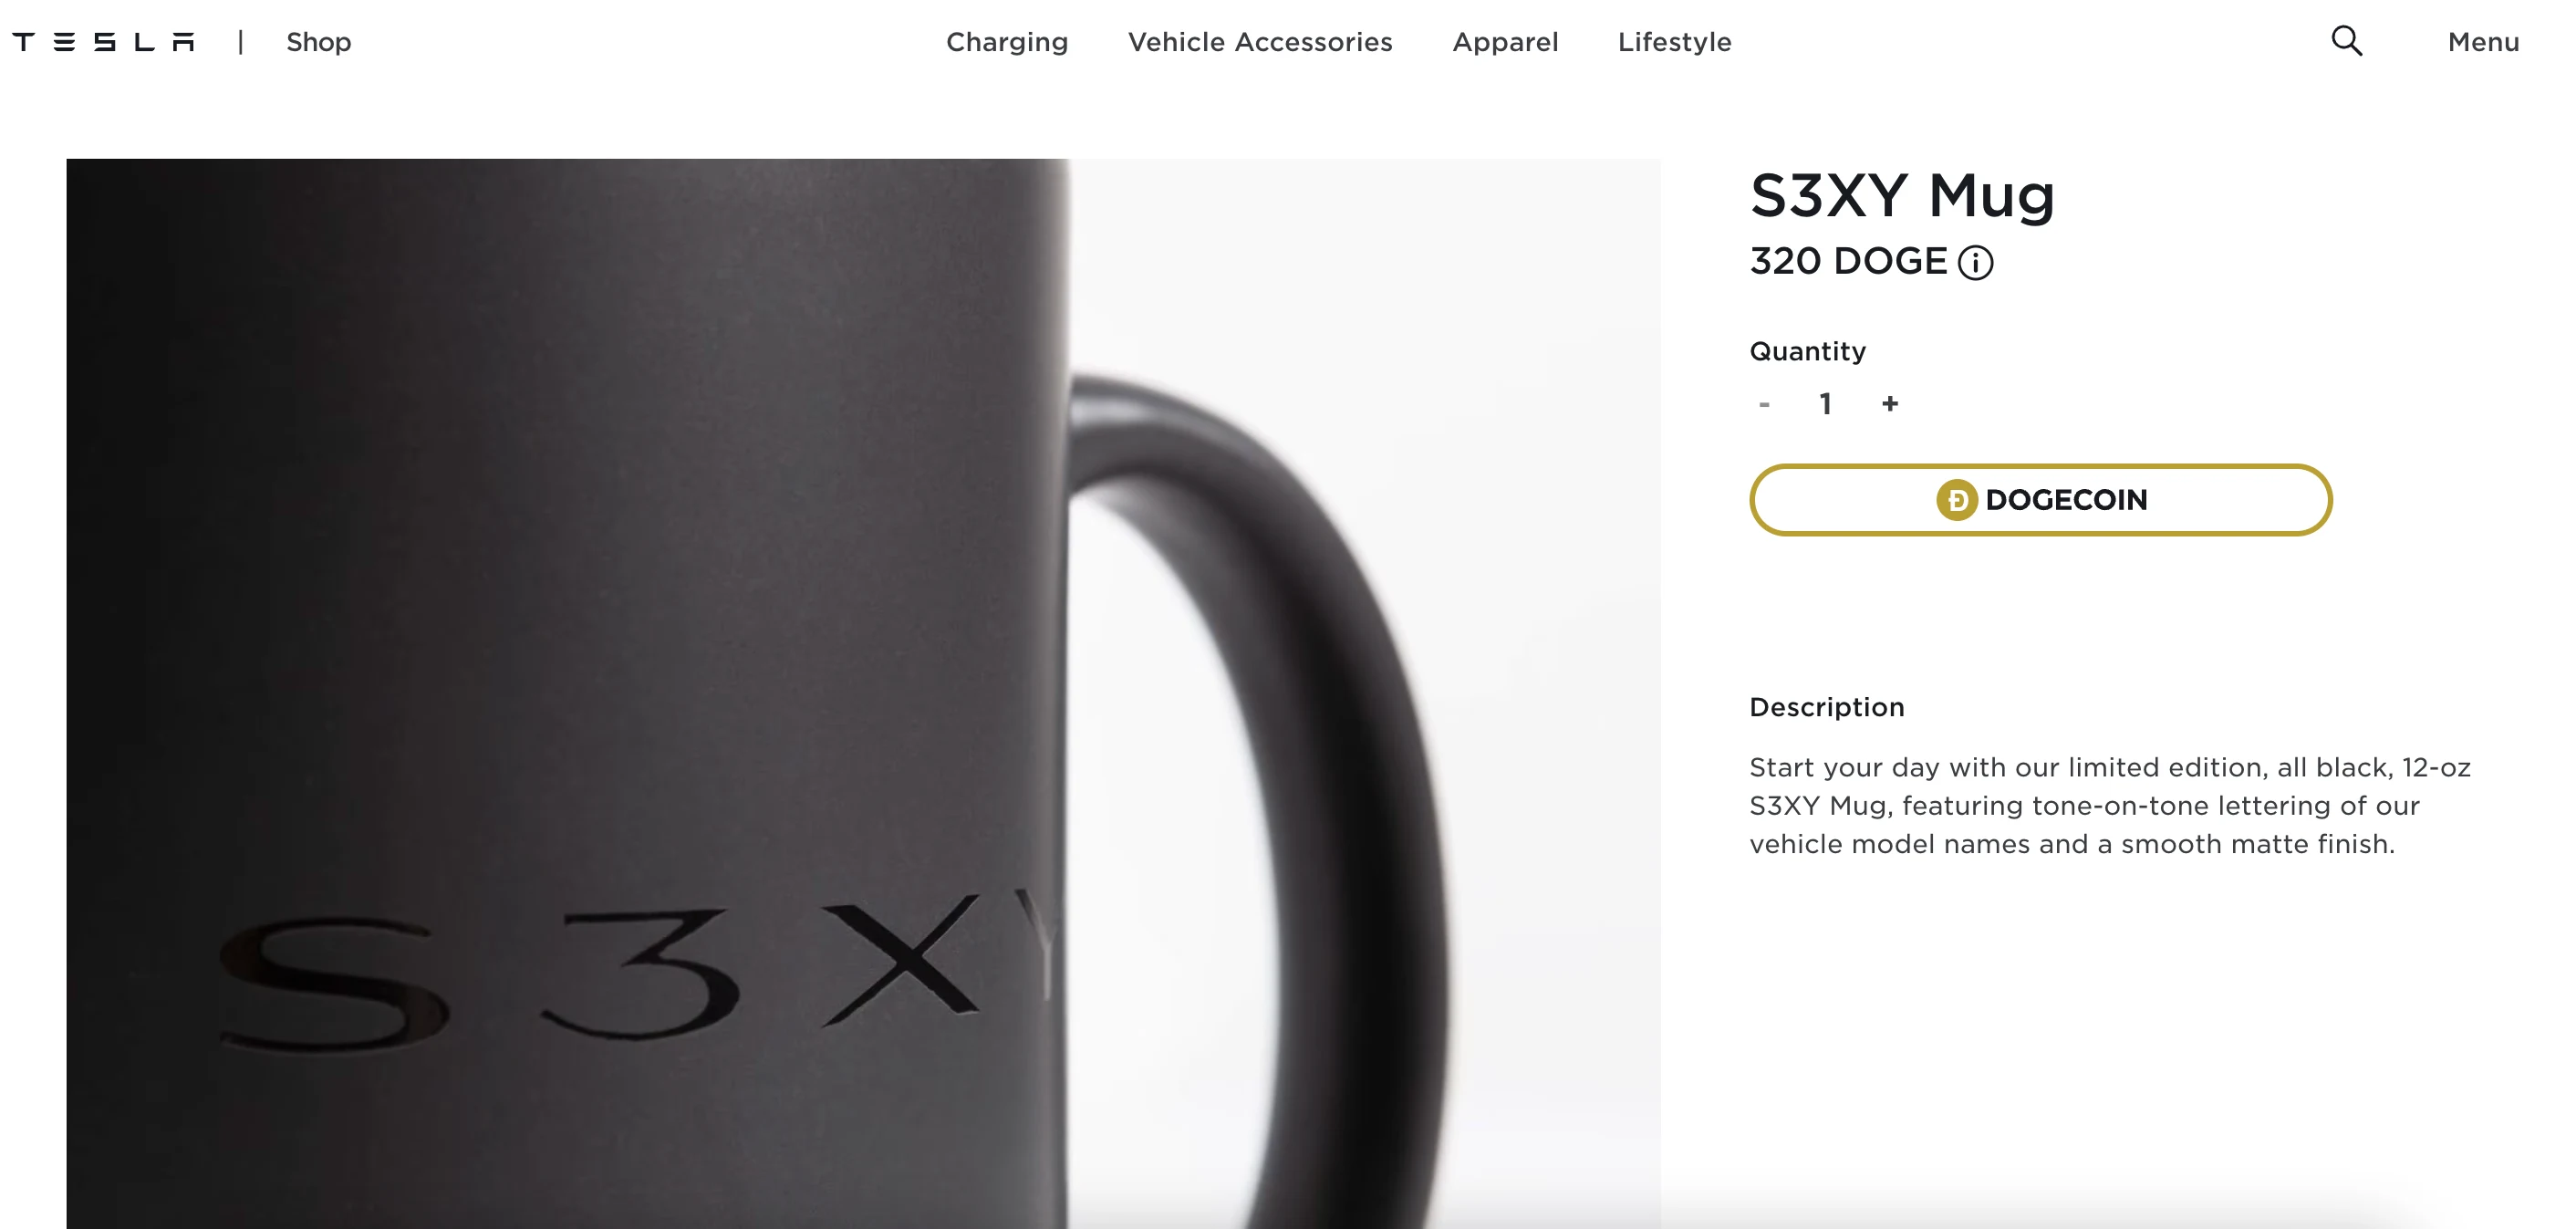 Tesla's S3XY Mug can be bought for 320 DOGE. Source: shop.tesla.com